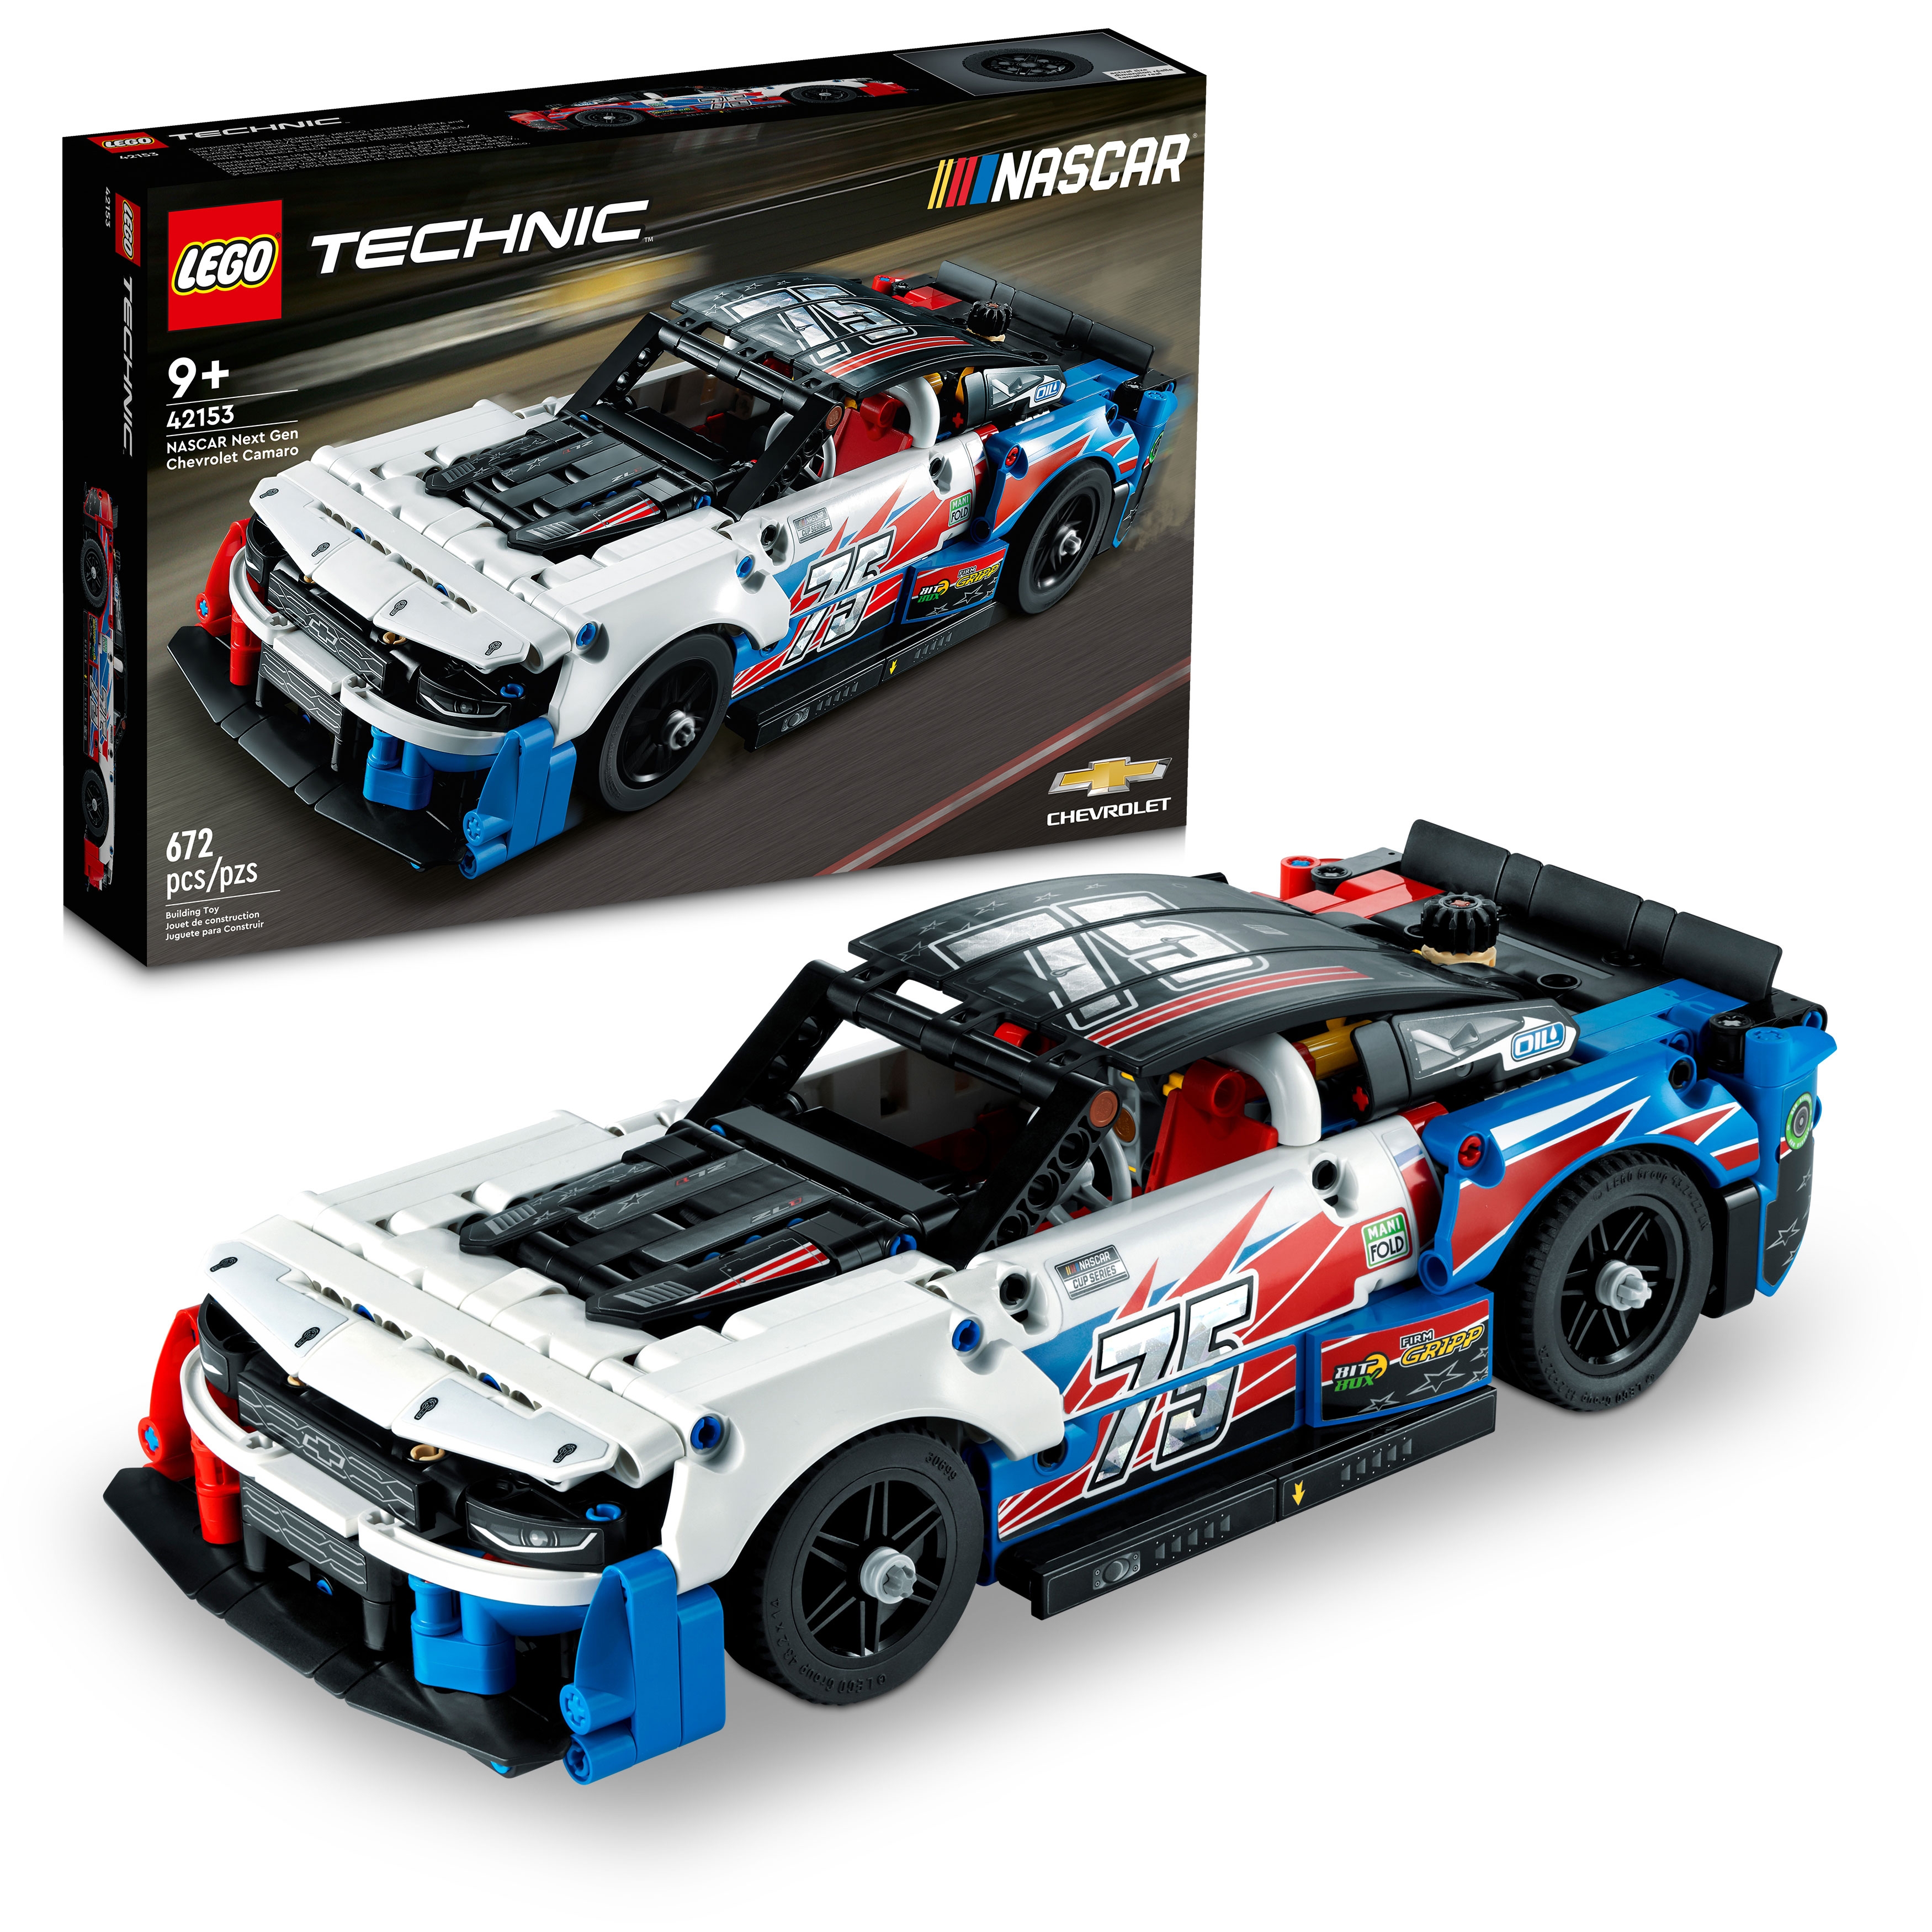 NASCAR® Next Gen Chevrolet Camaro ZL1 42153 | Technic | Oficial LEGO® Shop  ES